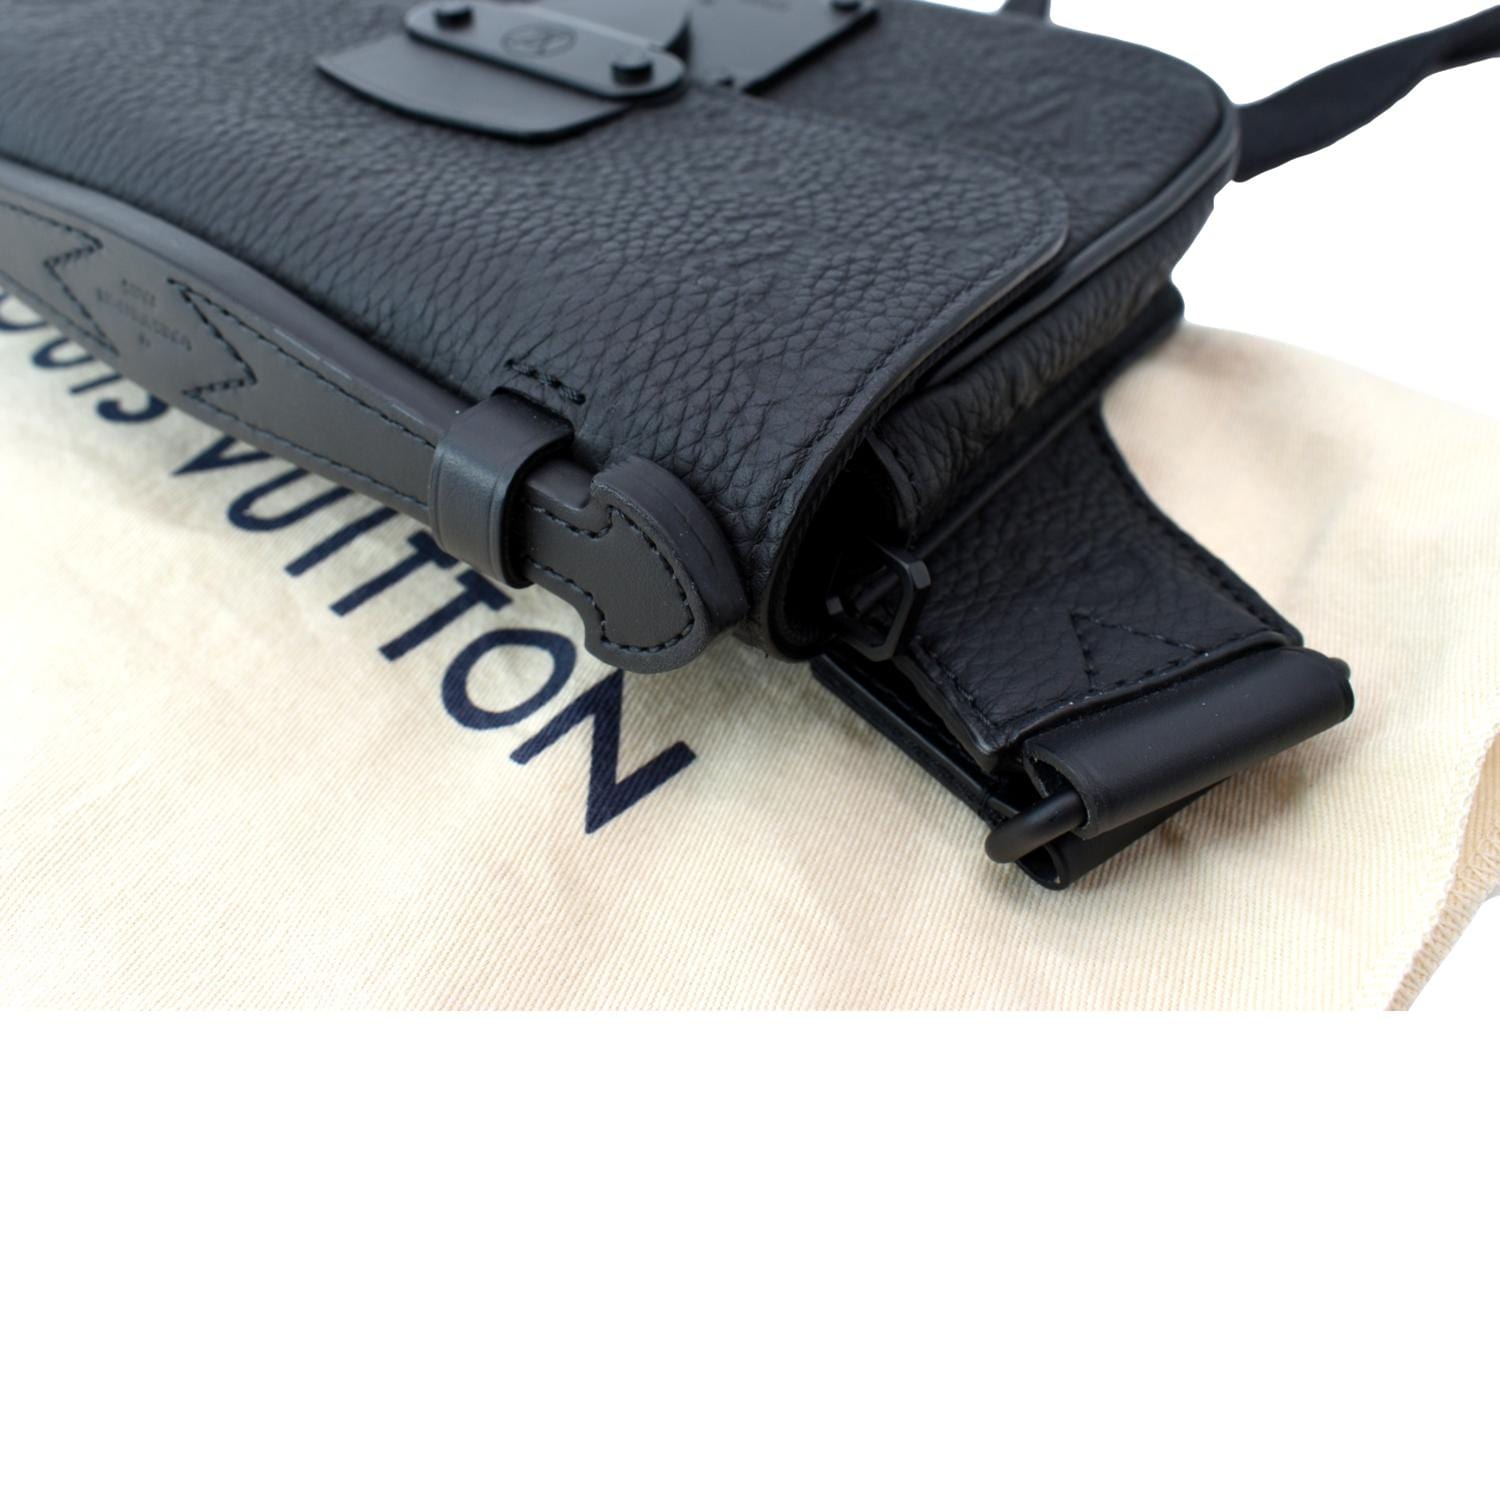 Louis Vuitton - S Lock Messenger Bag - Leather - Black - Men - Luxury